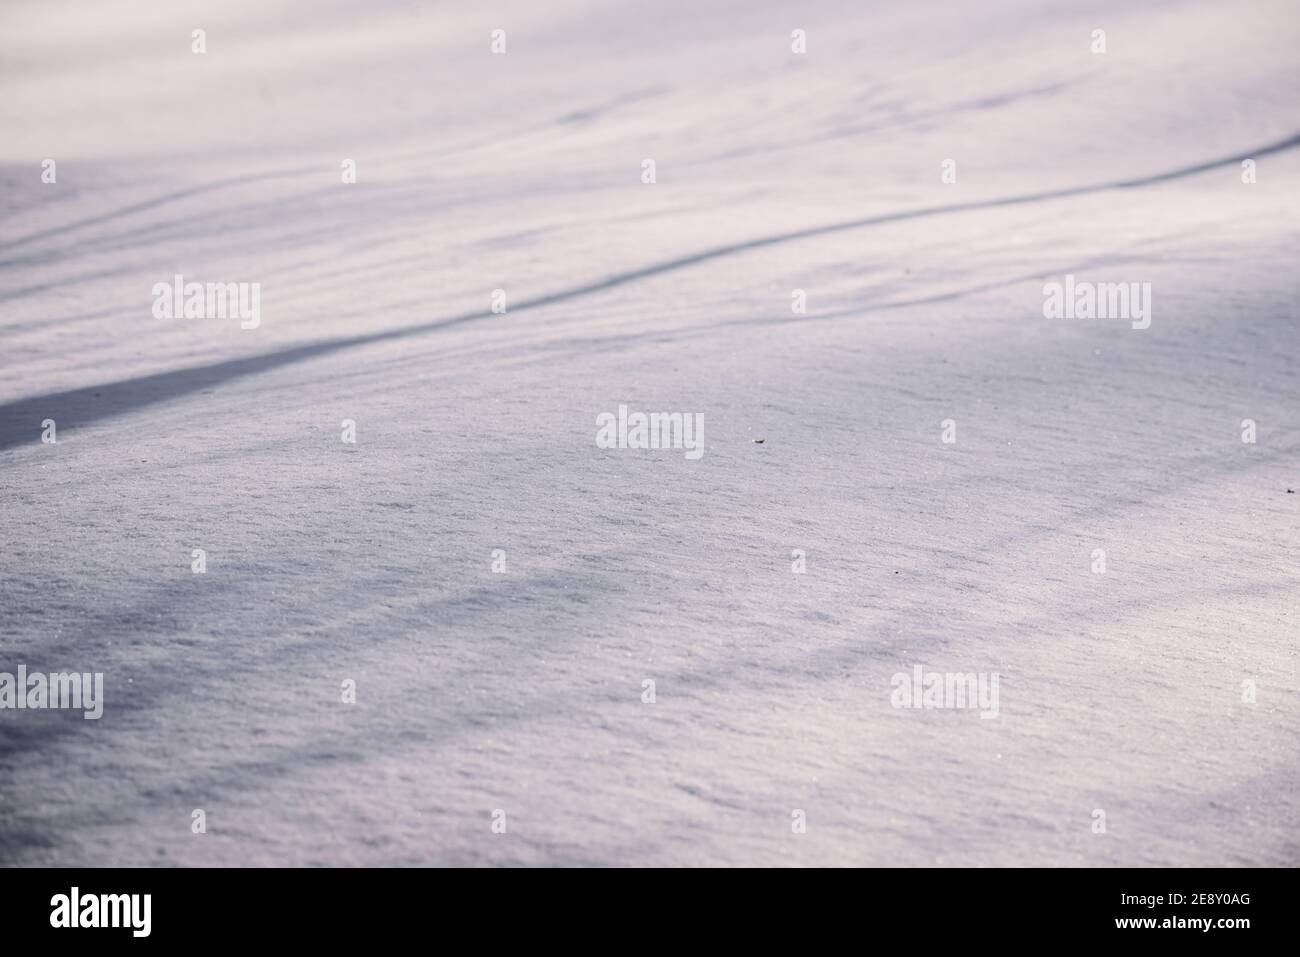 Selective focus photo. Snow covered ground. Stock Photo